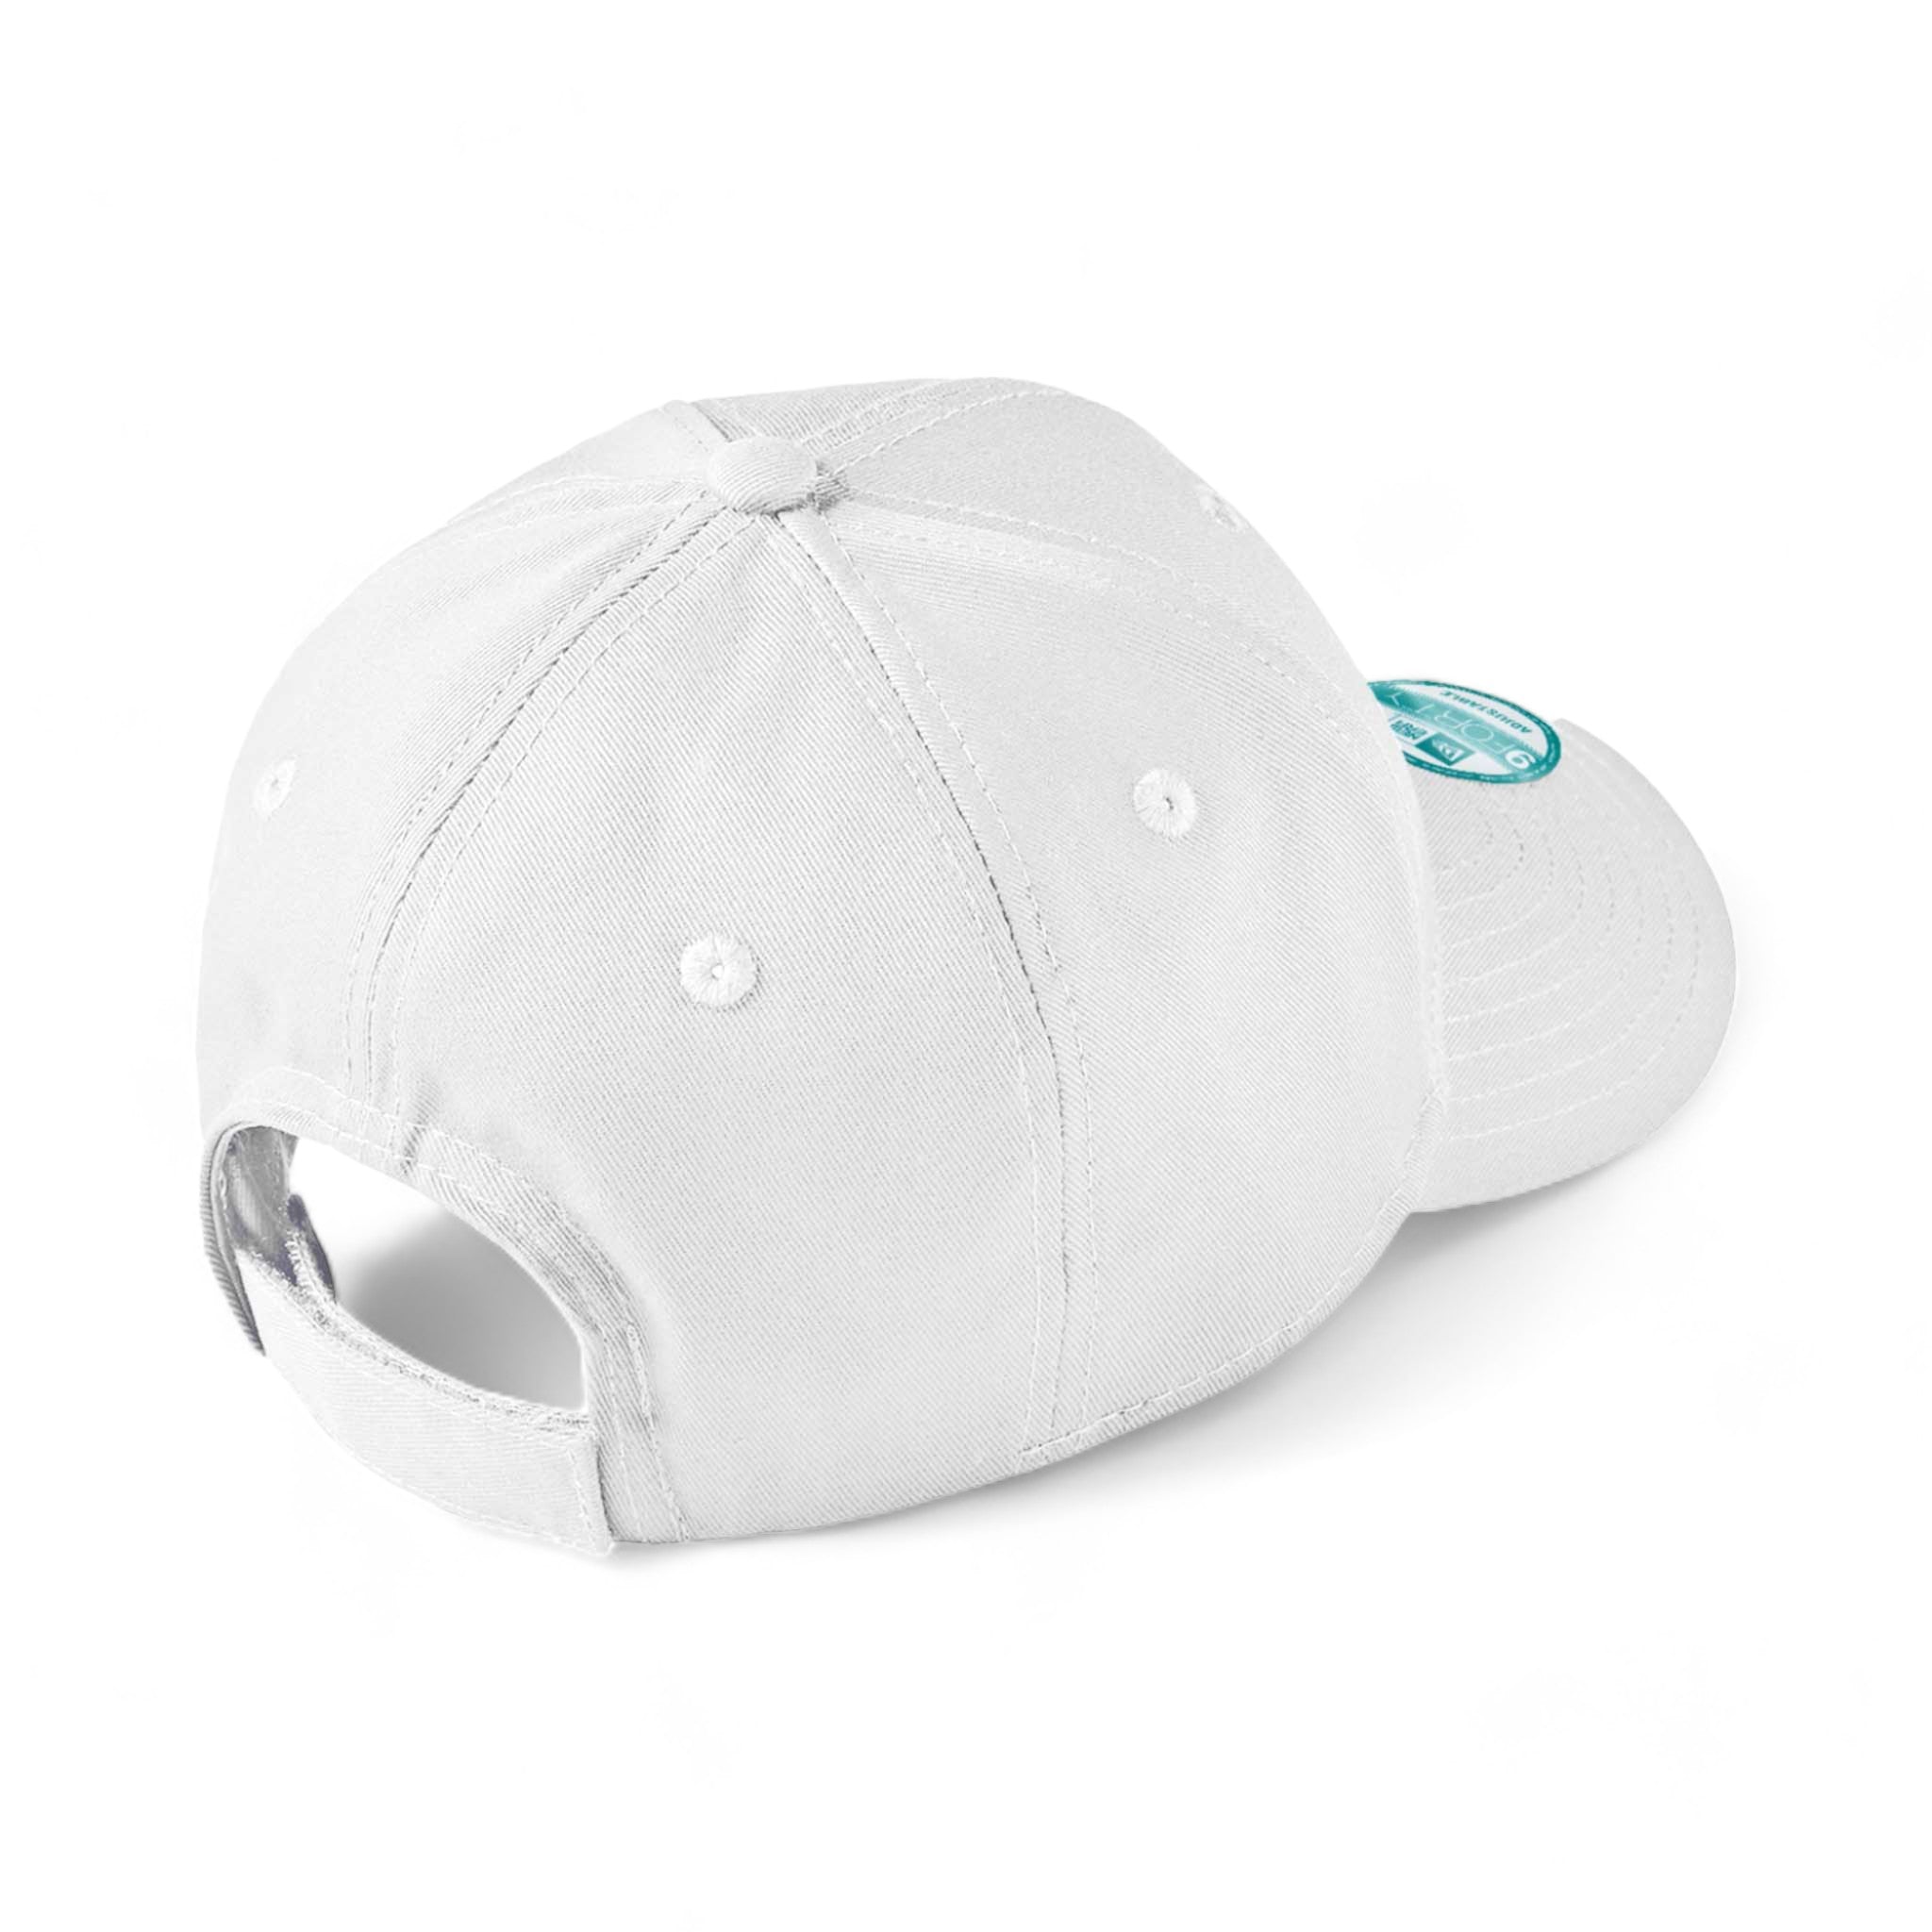 Back view of New Era NE200 custom hat in white